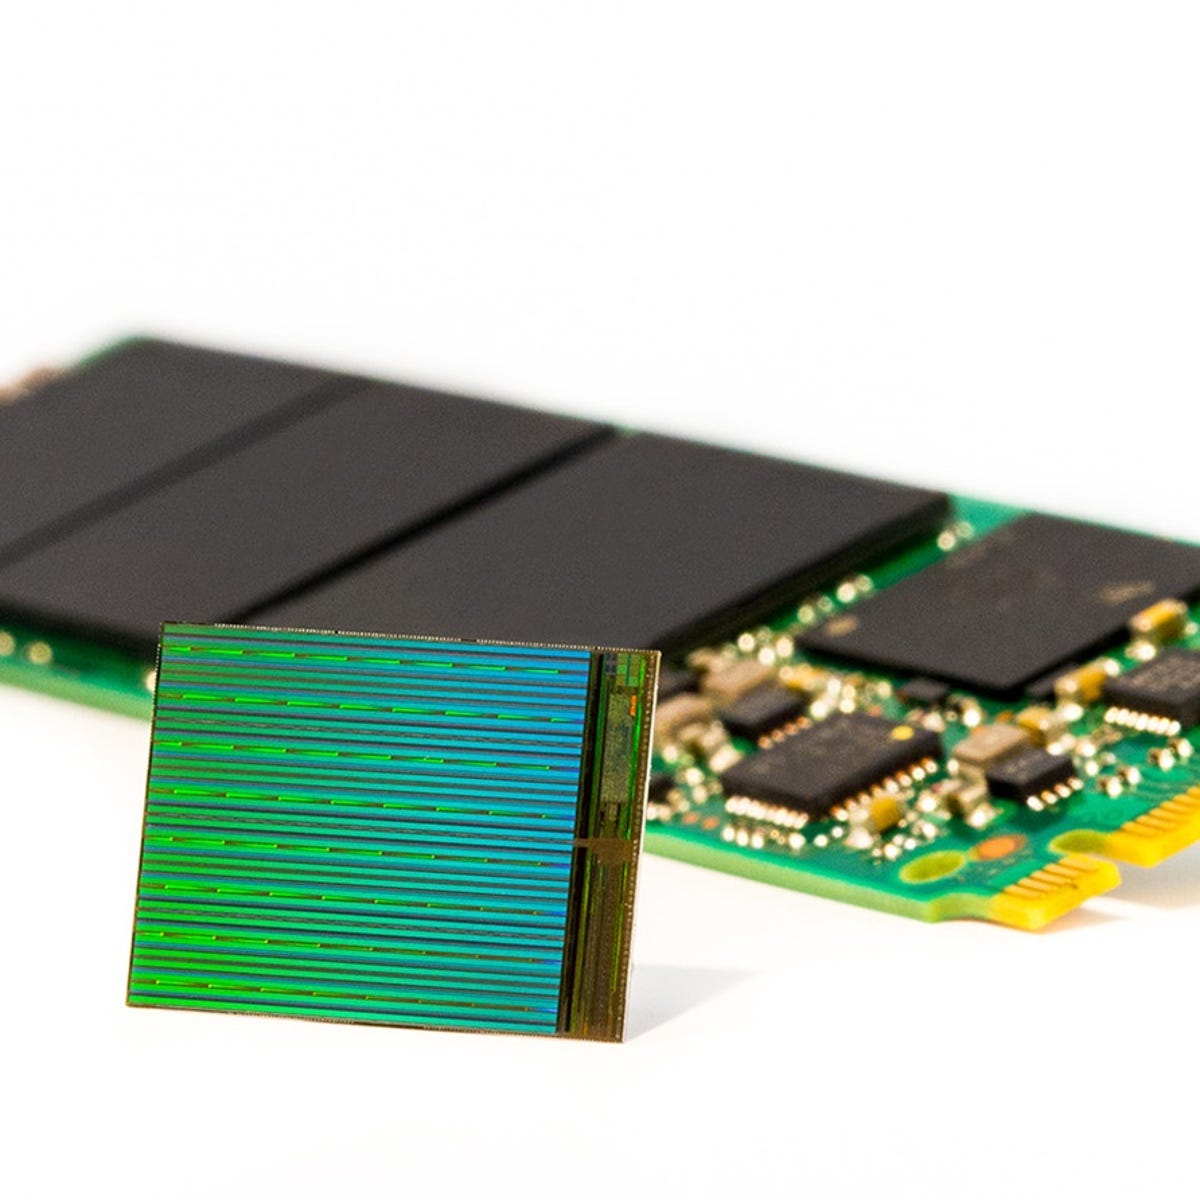 NAND память. Первый чип с флеш памятью. Чипы памяти Hynix.